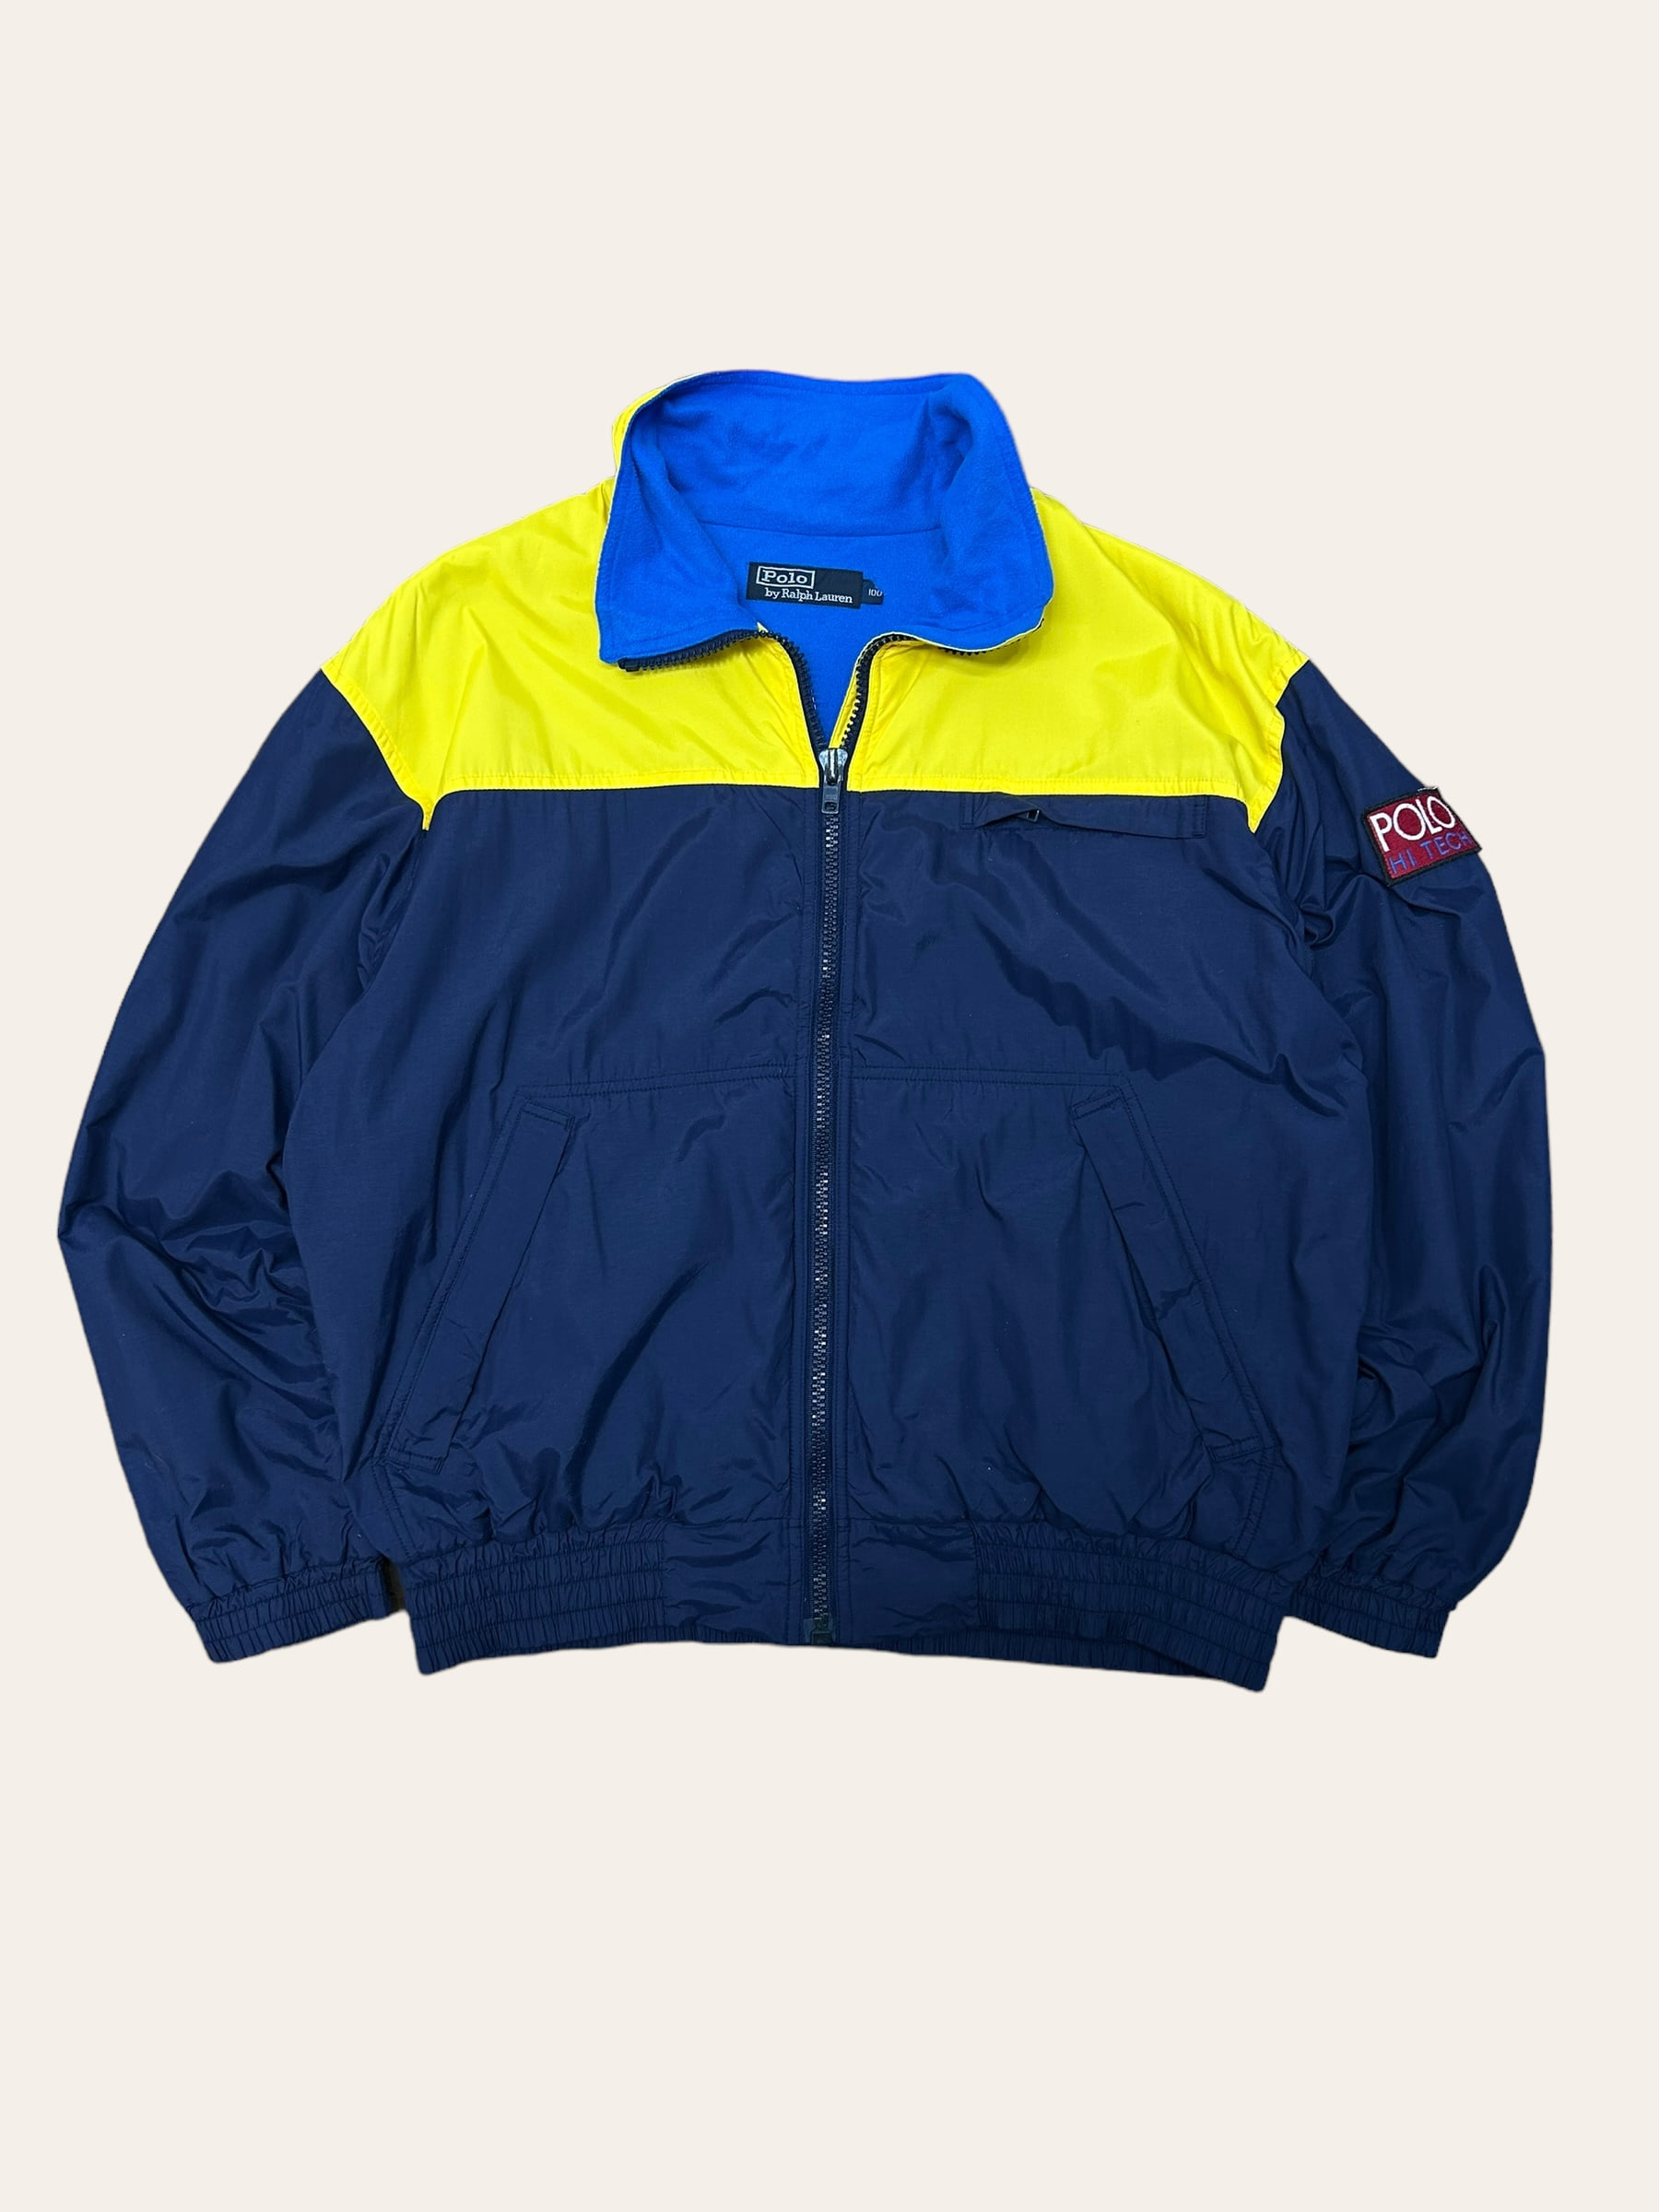 Polo ralph lauren 90&#039;s yellow/navy nylon HI-TECH windbreaker jacket 100